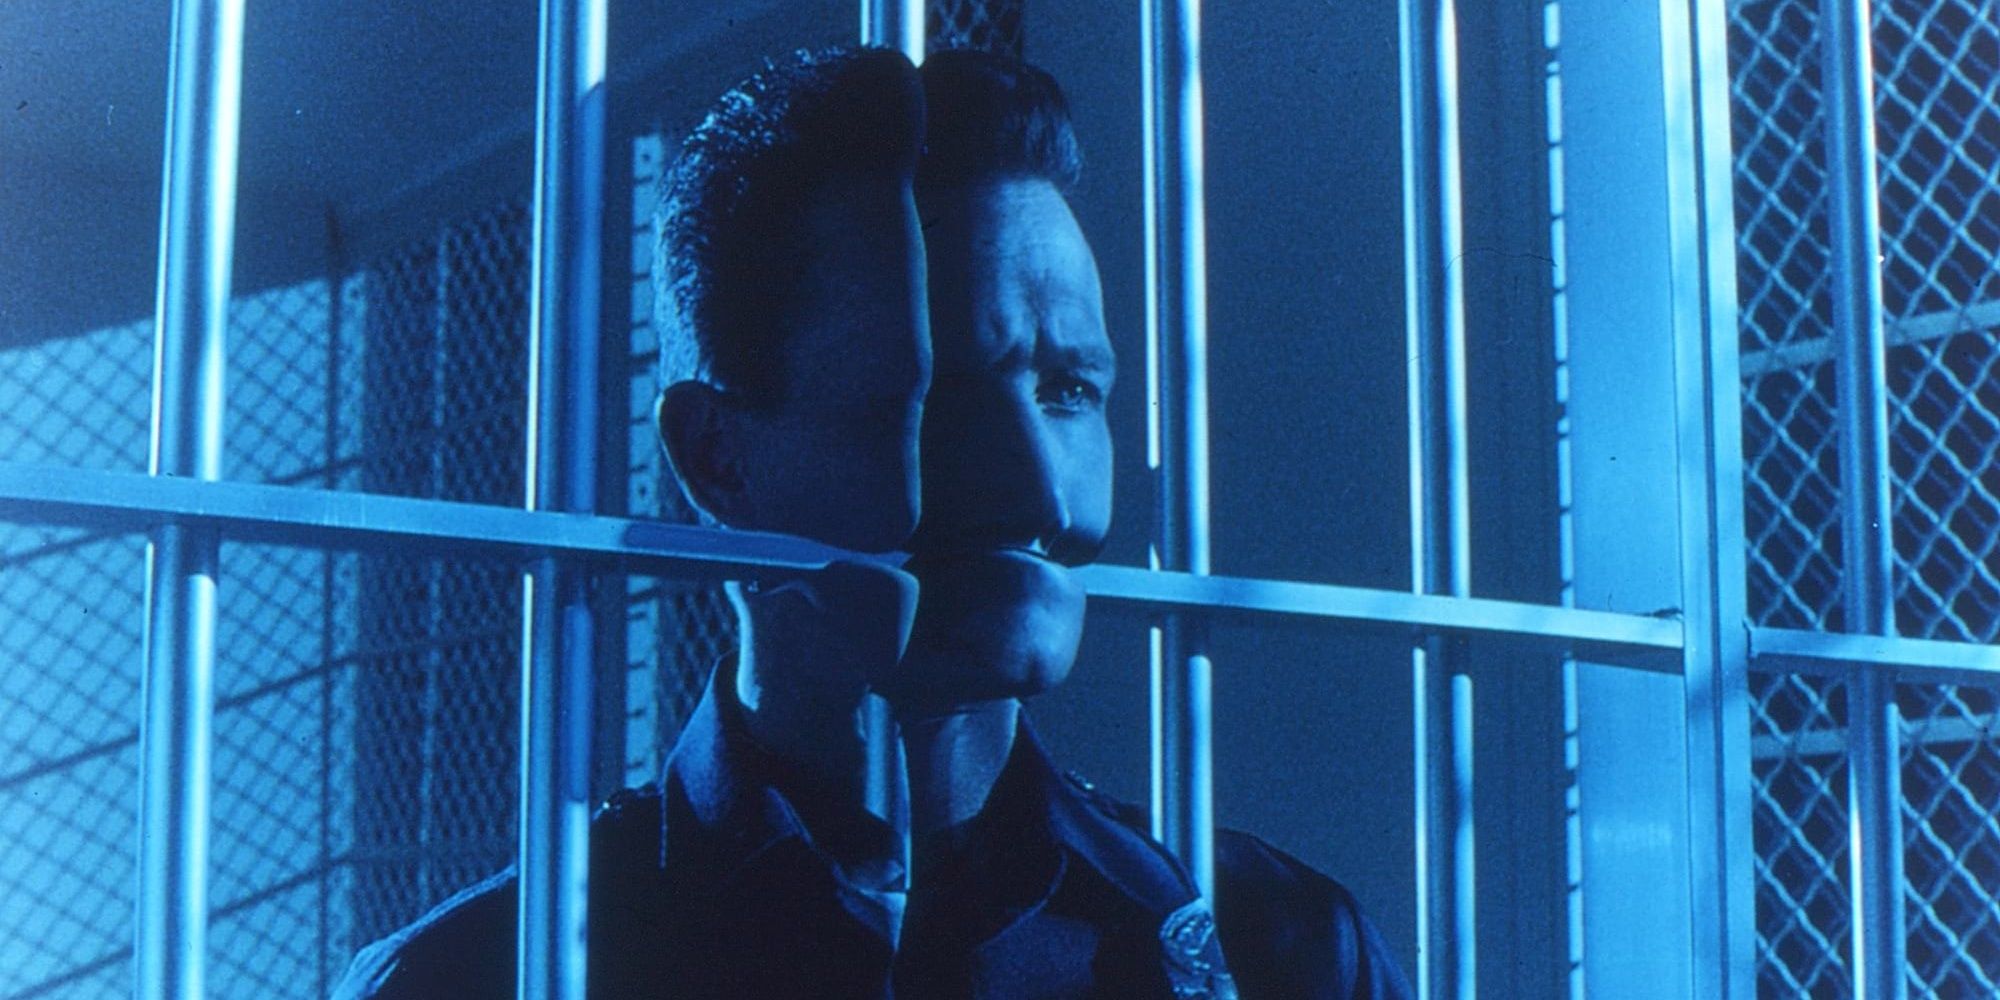 T-1000 walking through the prison bars in Terminator 2